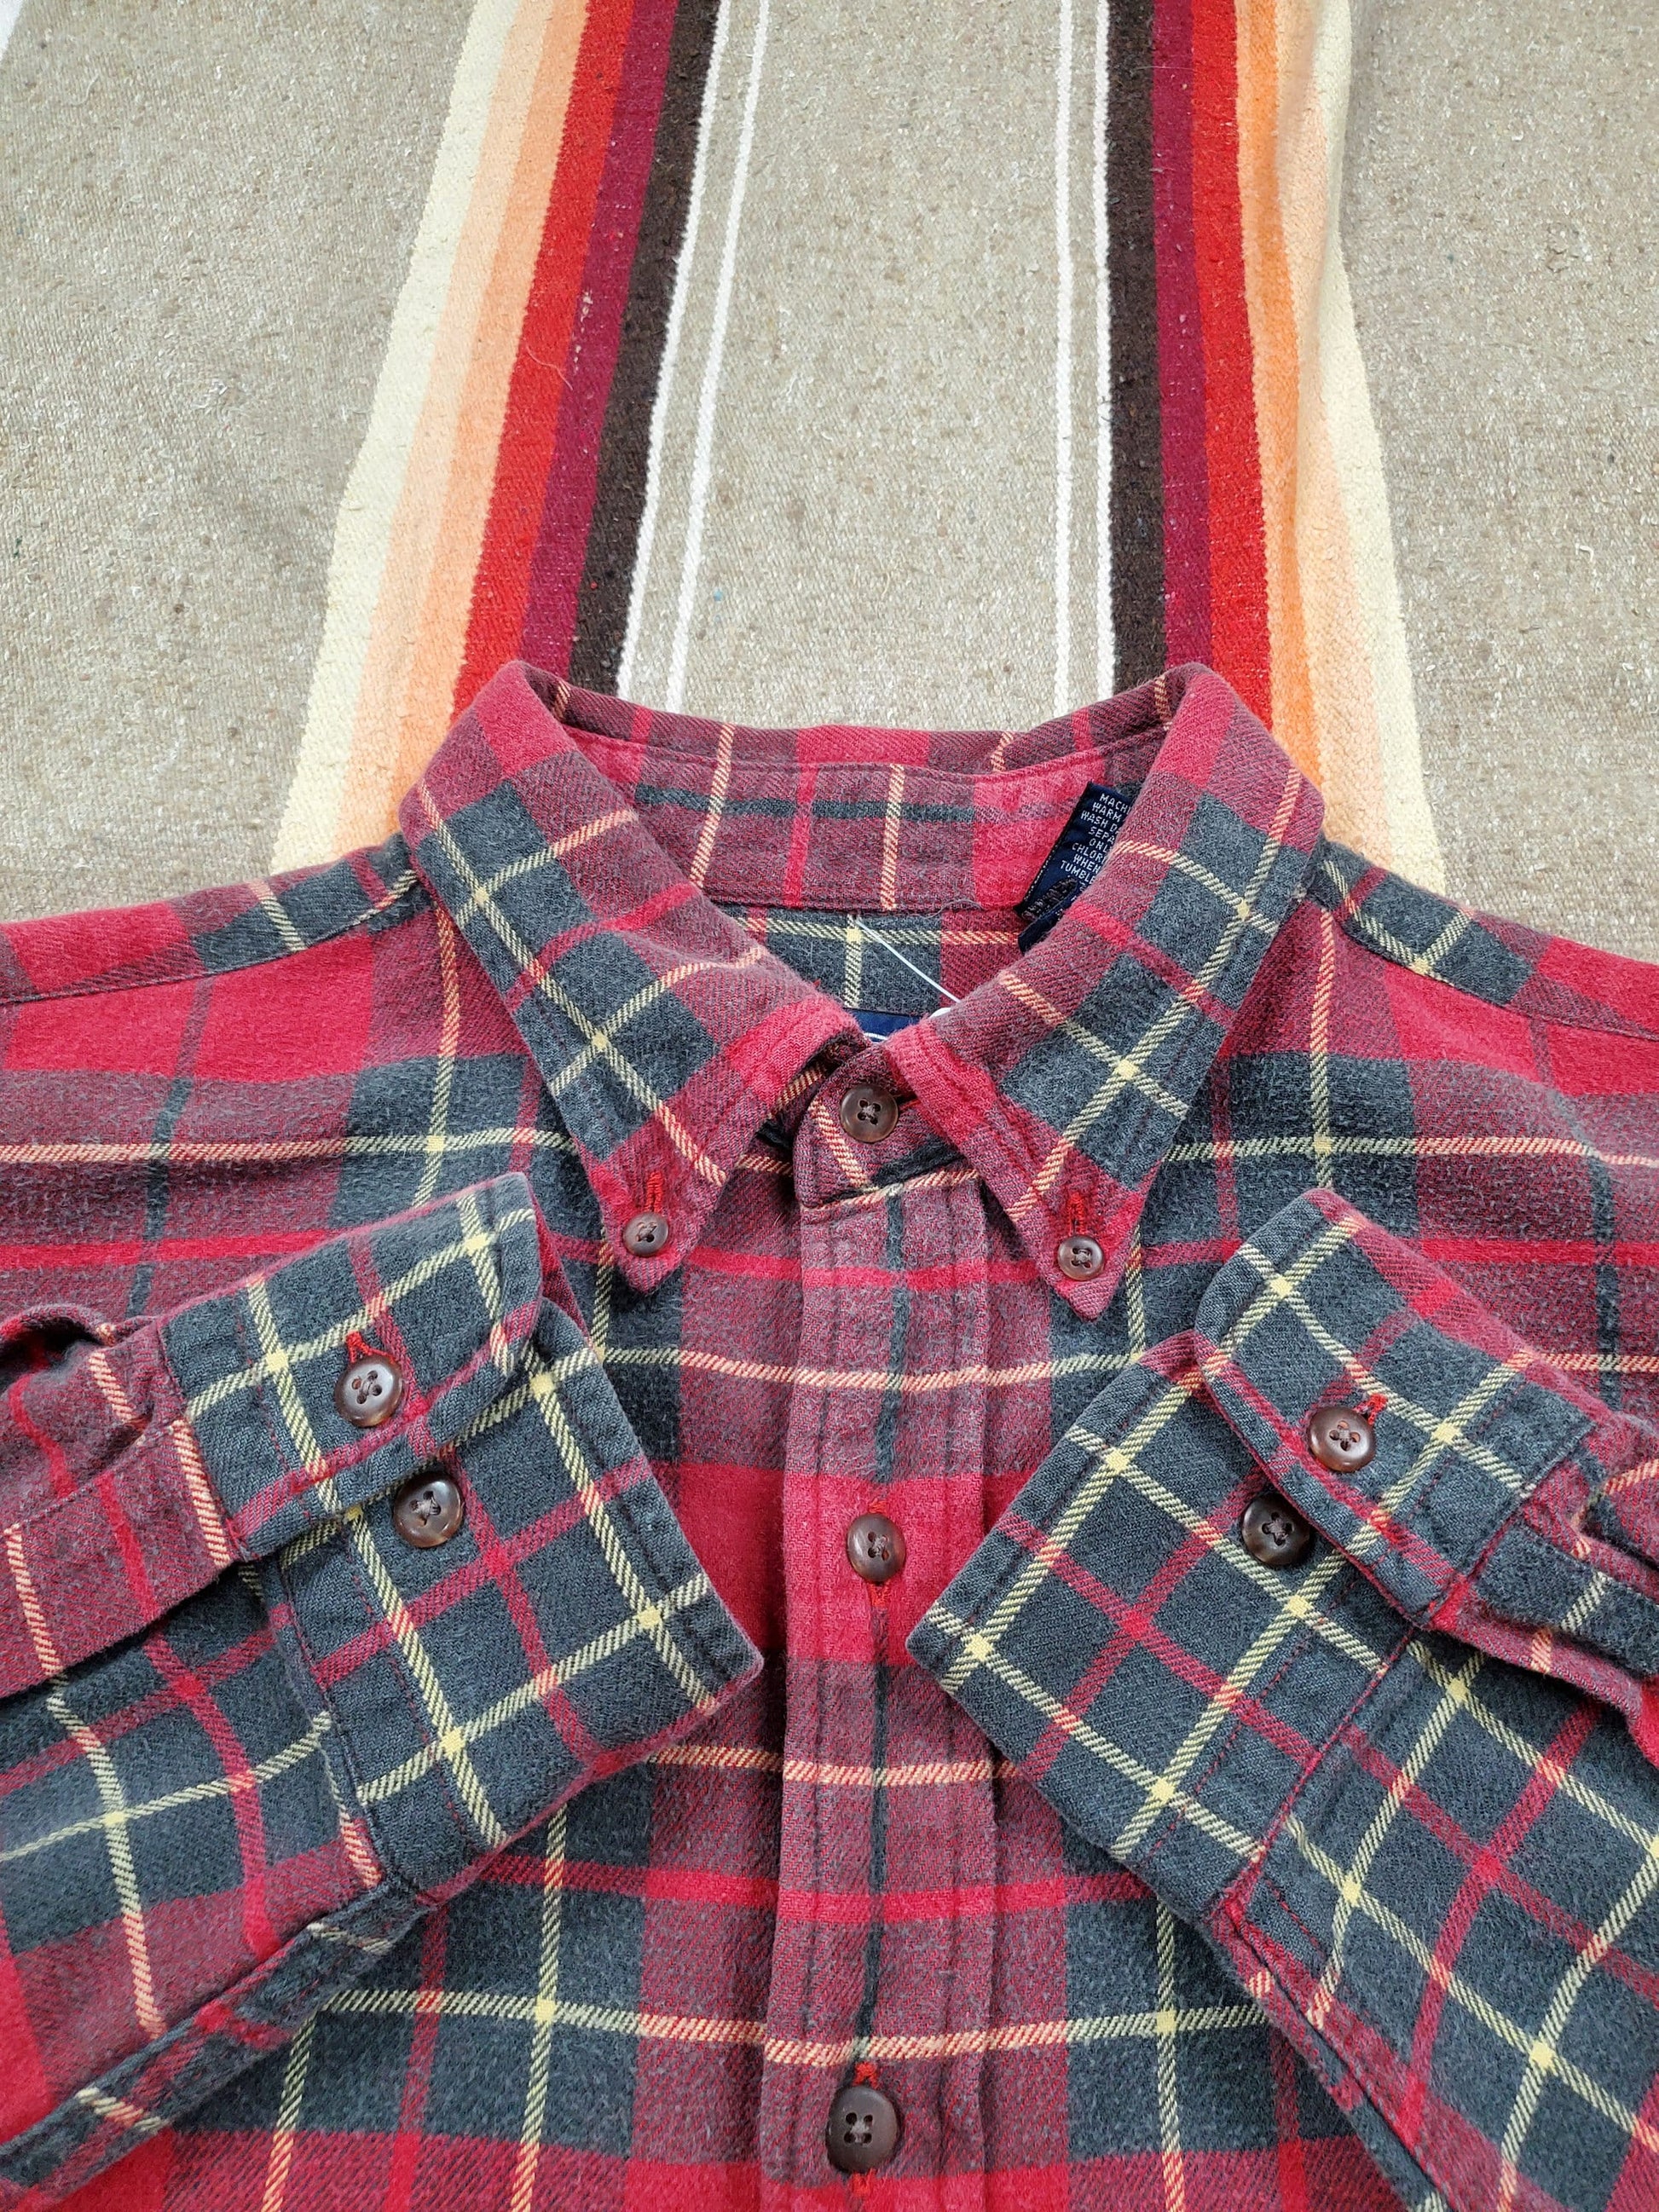 1990s Lands End Red Plaid Button Down Flannel Shirt Size XL